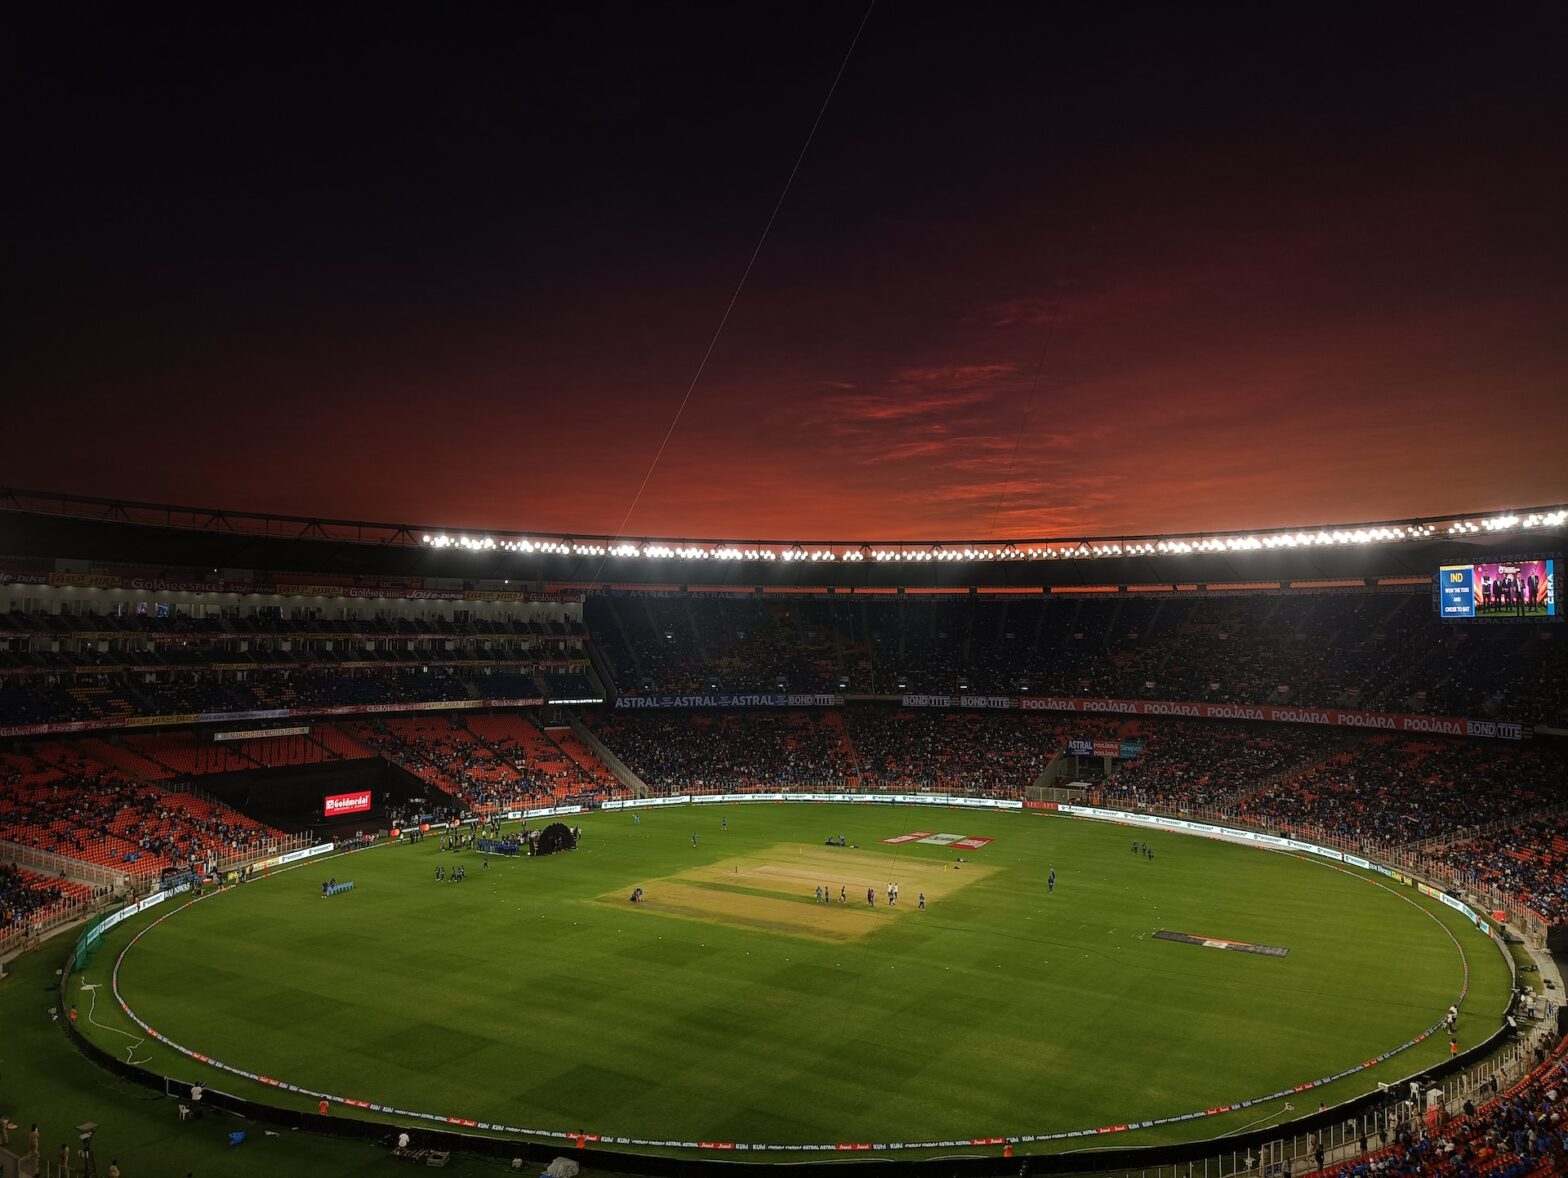 Pictured: Motera Stadium, the largest stadium in the world.